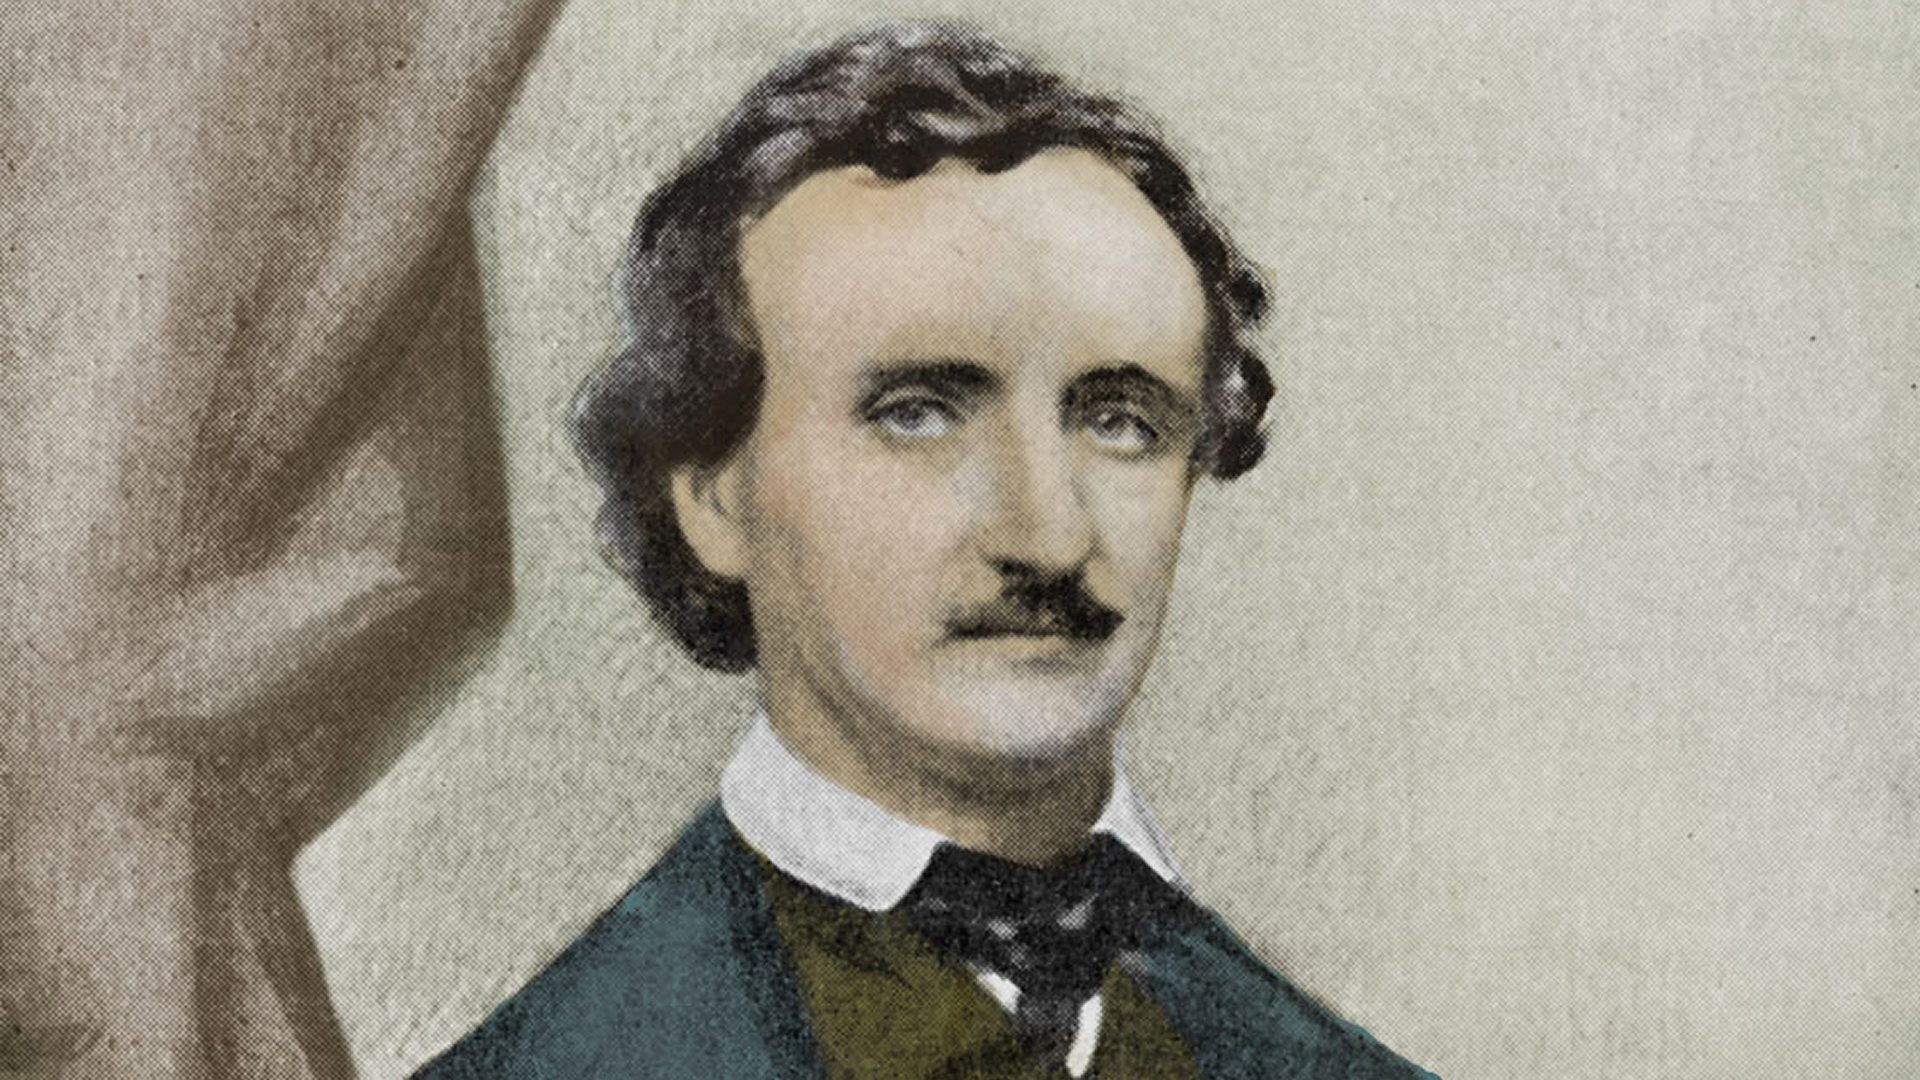 Edgar Allan Poe Birth Chart